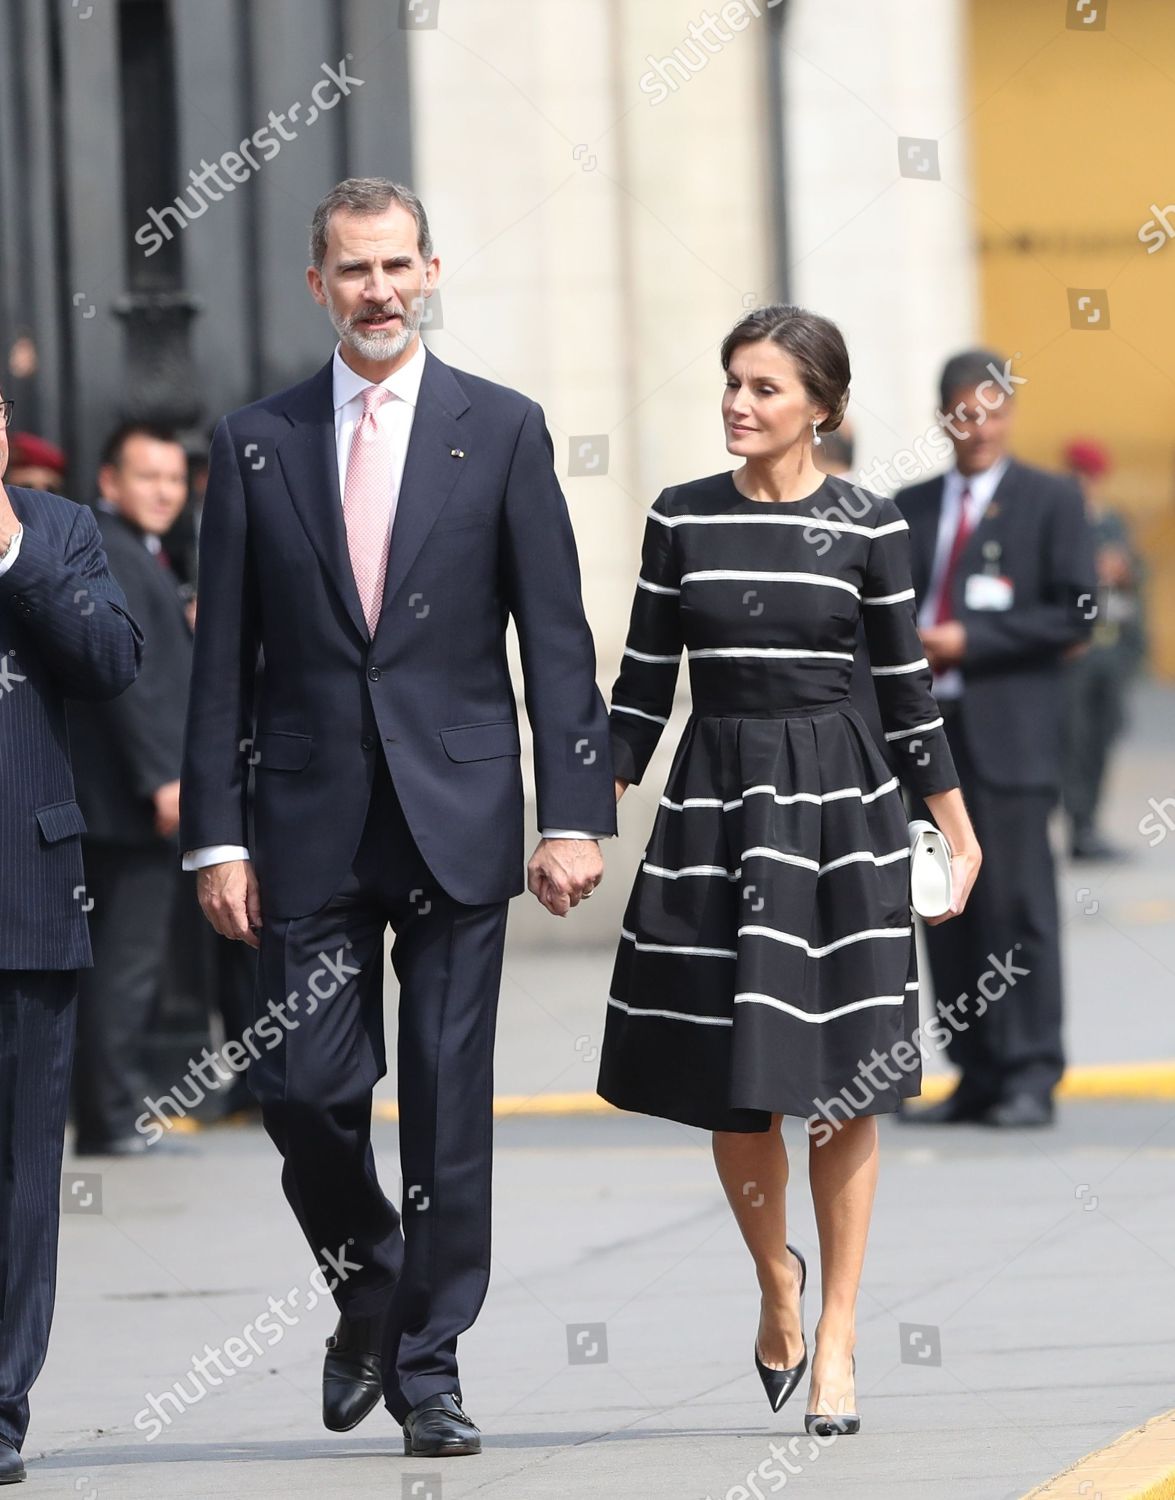 spanish-royals-visit-to-lima-peru-shutterstock-editorial-9977226n.jpg